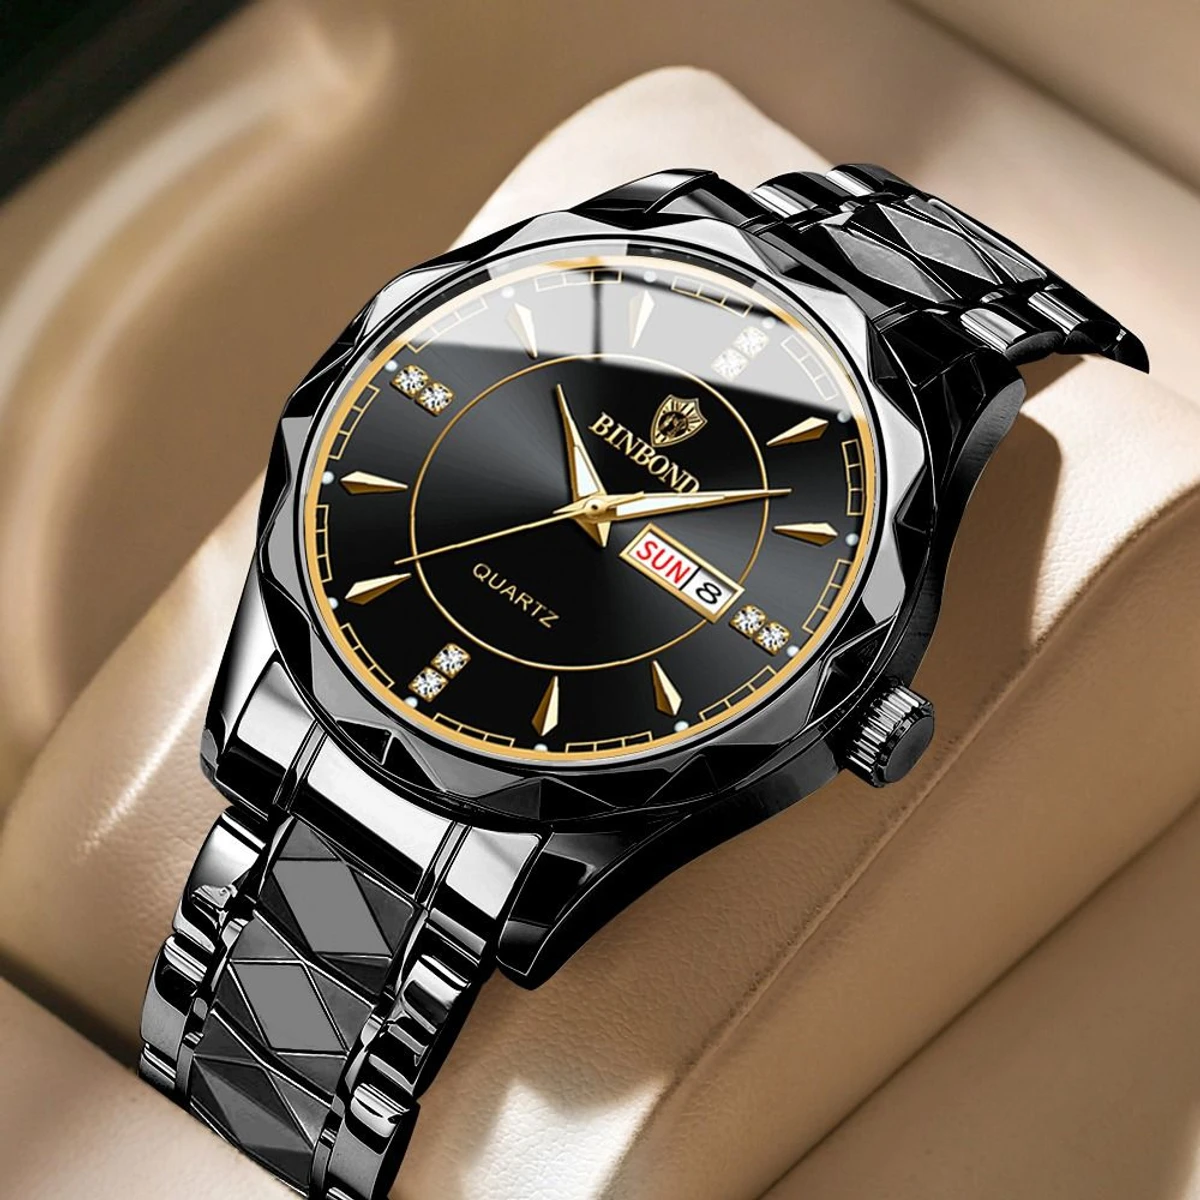 Binbond Luxury Men Watches Business Top Brand Man Wristwatch Waterproof Luminous Date Week Quartz Men's Watch High Quality+Box- Black